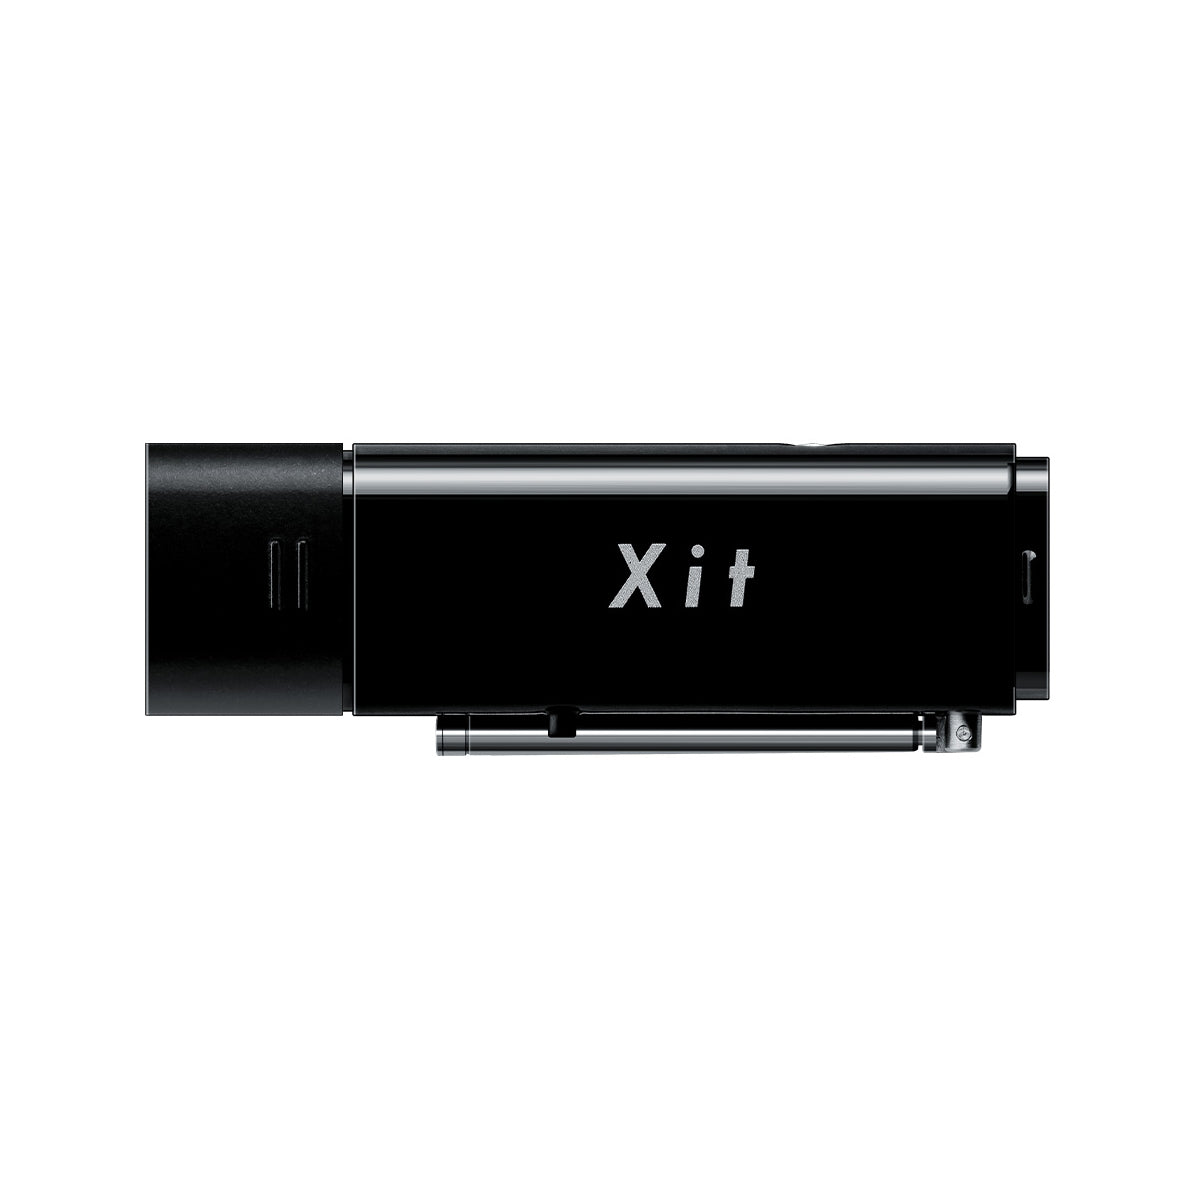 Xit Stick (サイト・スティック) テレビチューナー [XIT-STK110] – 秋葉館